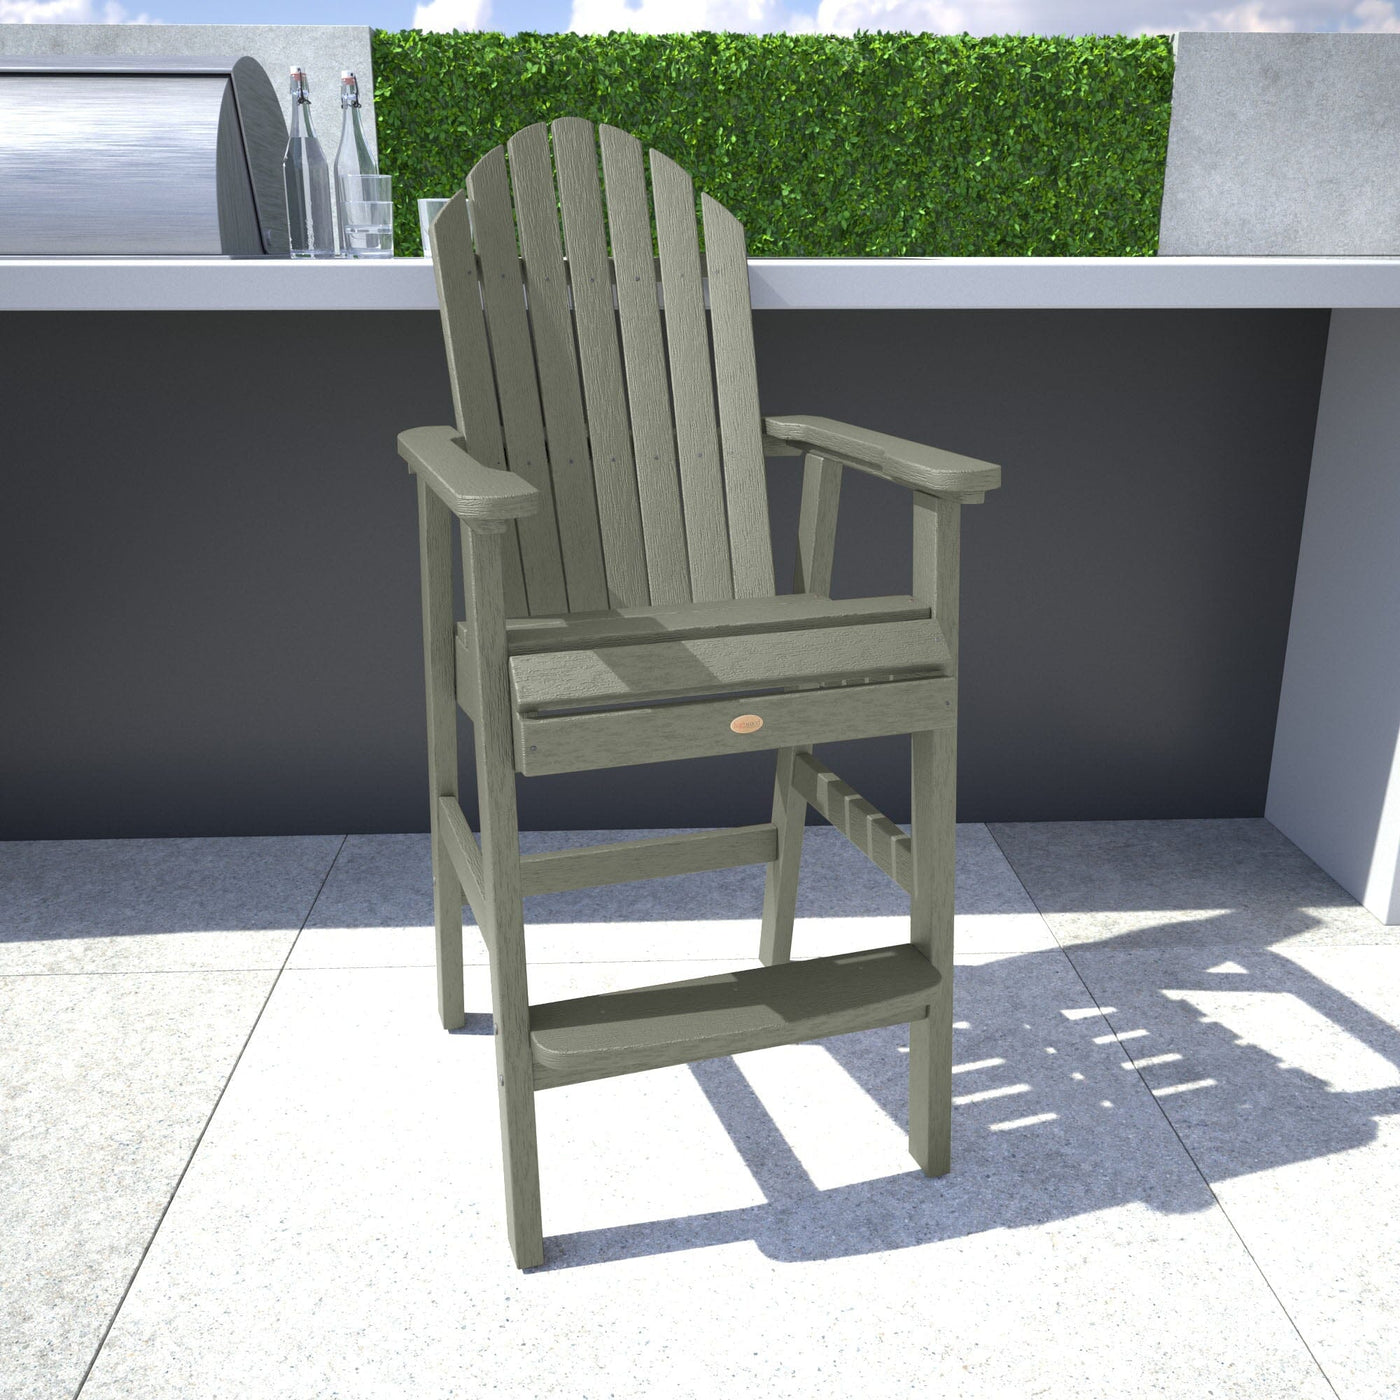 Light green Hamilton Bar Height Chair in outdoor kitchen